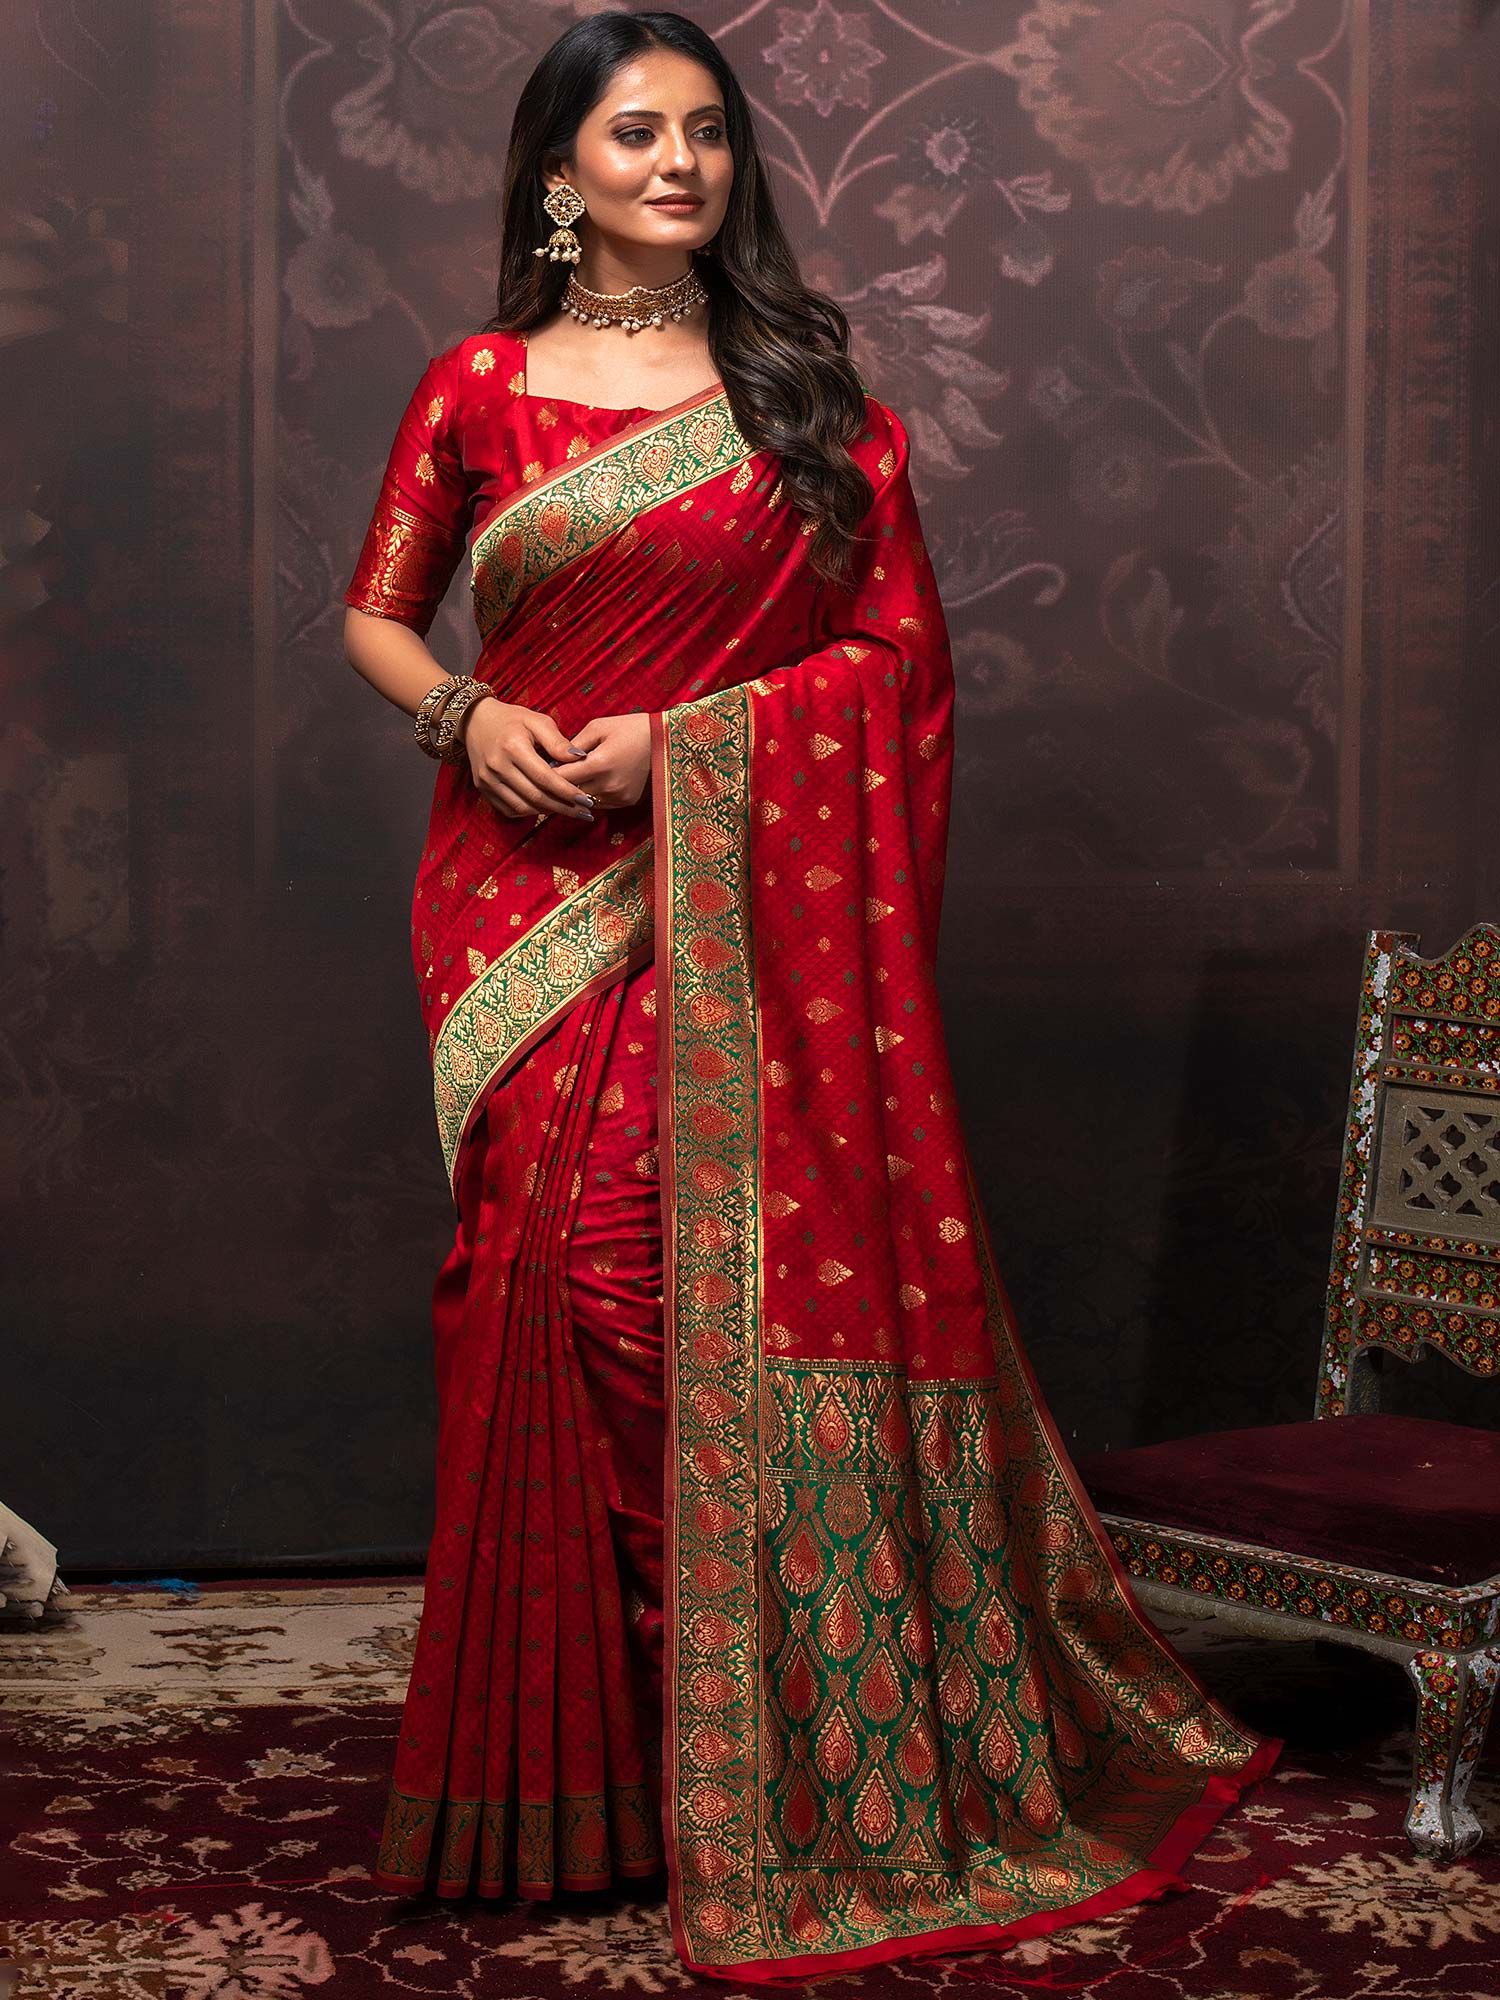 Premium Photo | Bride in Red Saree Isolated on White